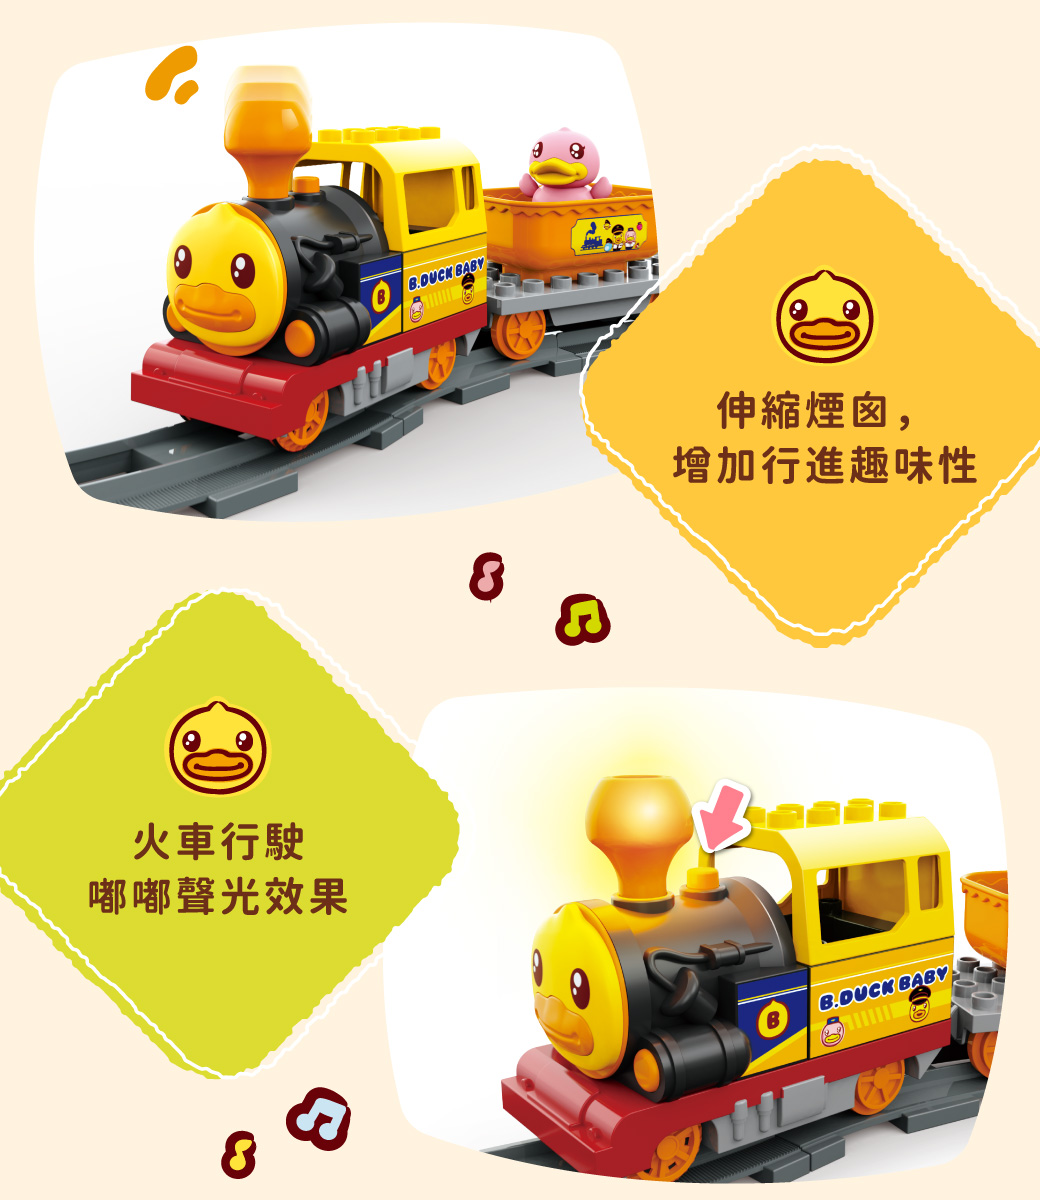 B.Duck小黃鴨 電動軌道火車大顆粒積木玩具